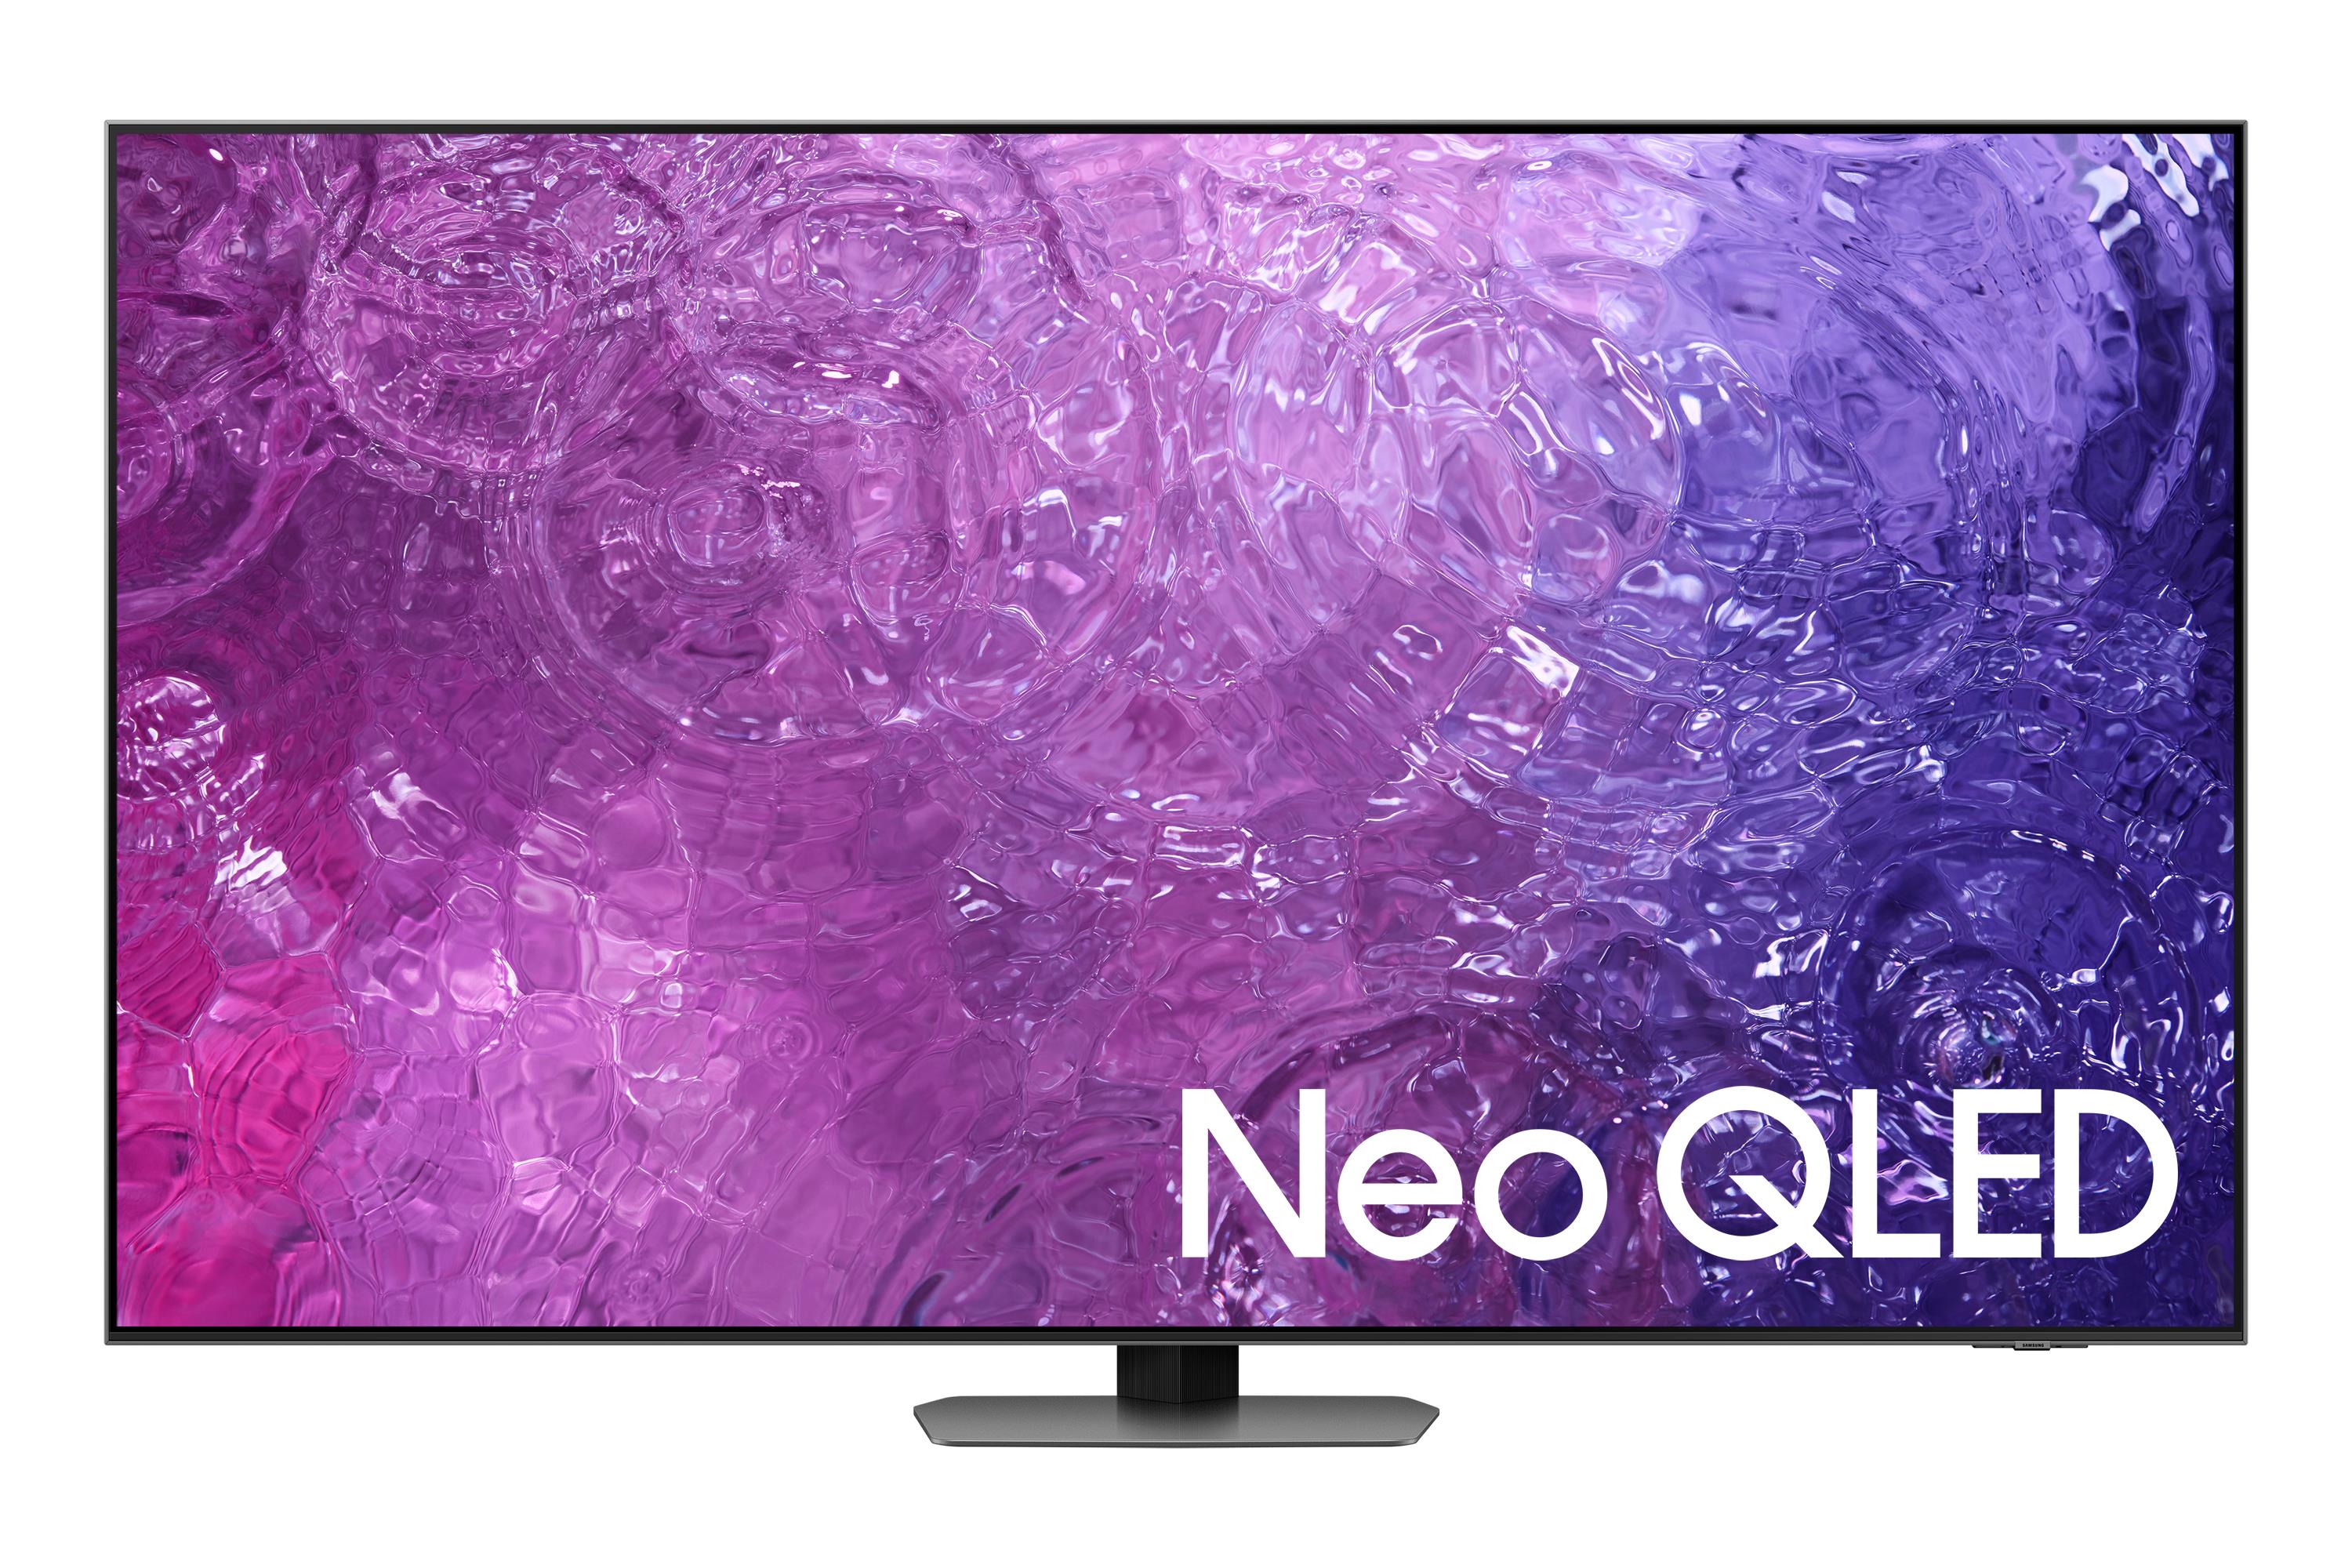 Samsung TV Neo Qled